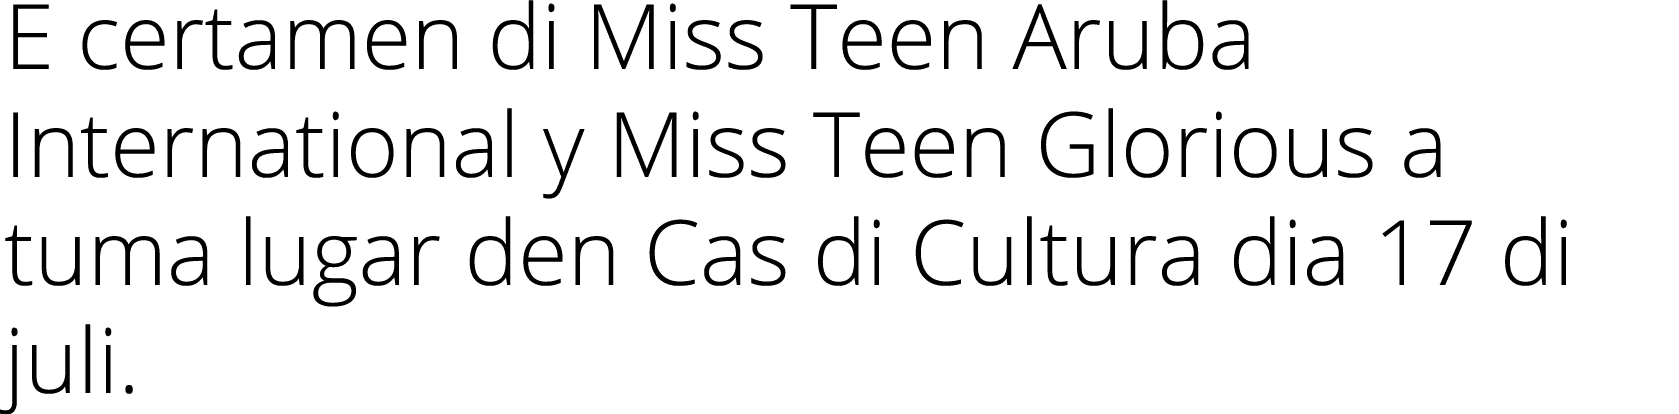 E certamen di Miss Teen Aruba International y Miss Teen Glorious a tuma lugar den Cas di Cultura dia 17 di juli.